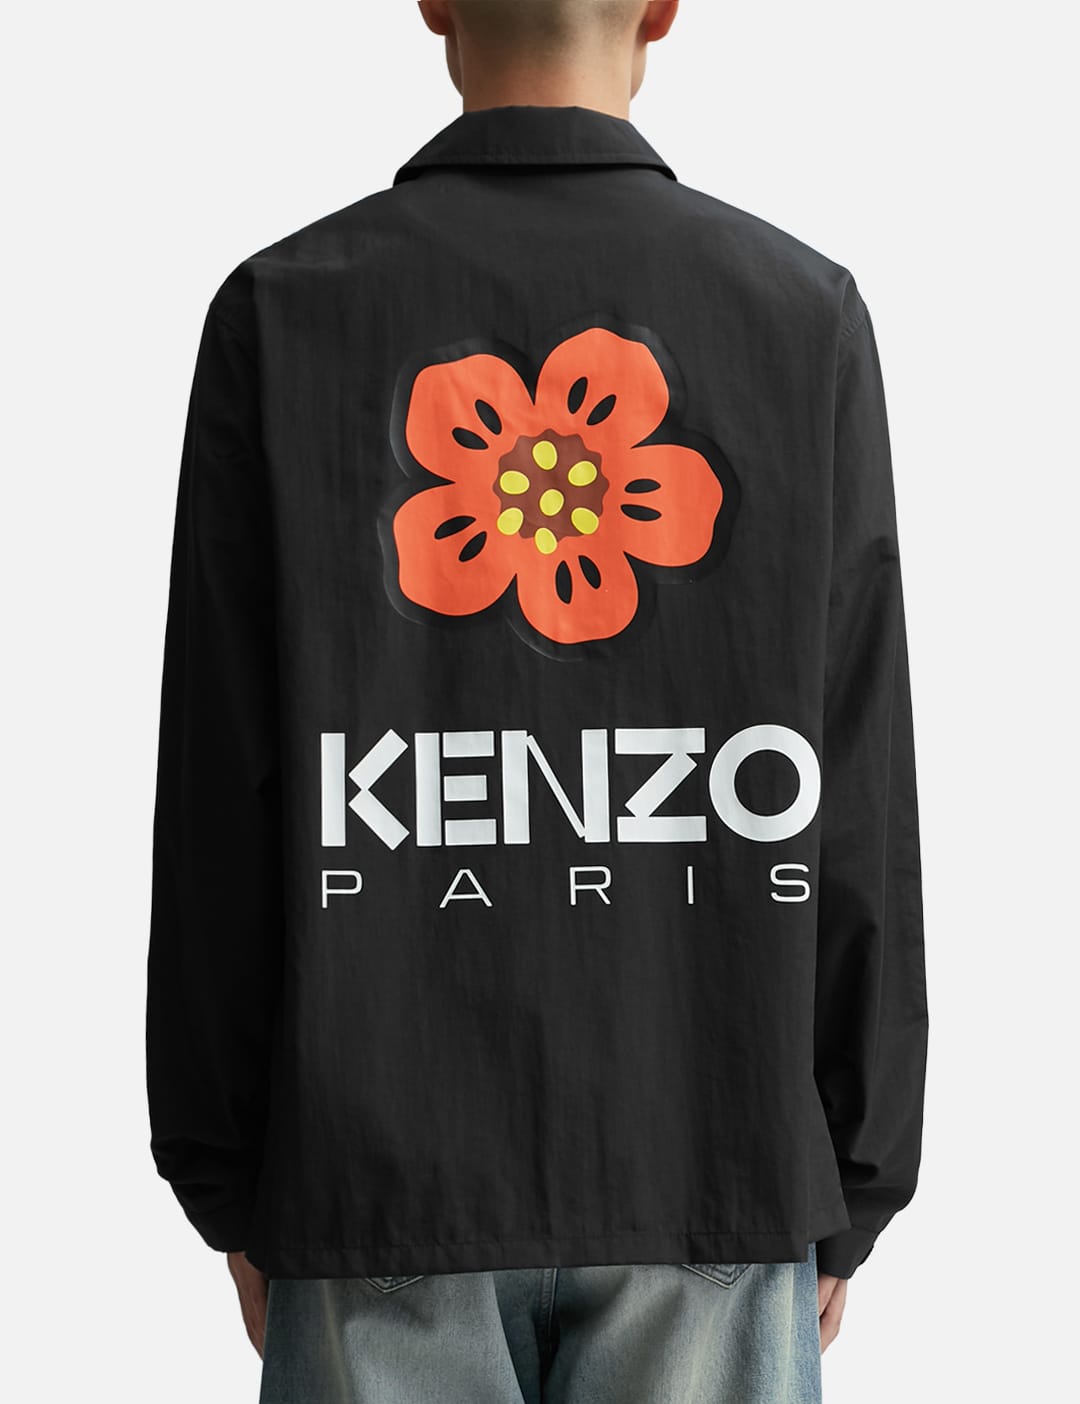 Kenzo - Boke Flower Coach Jacket | HBX - Globally Curated Fashion 